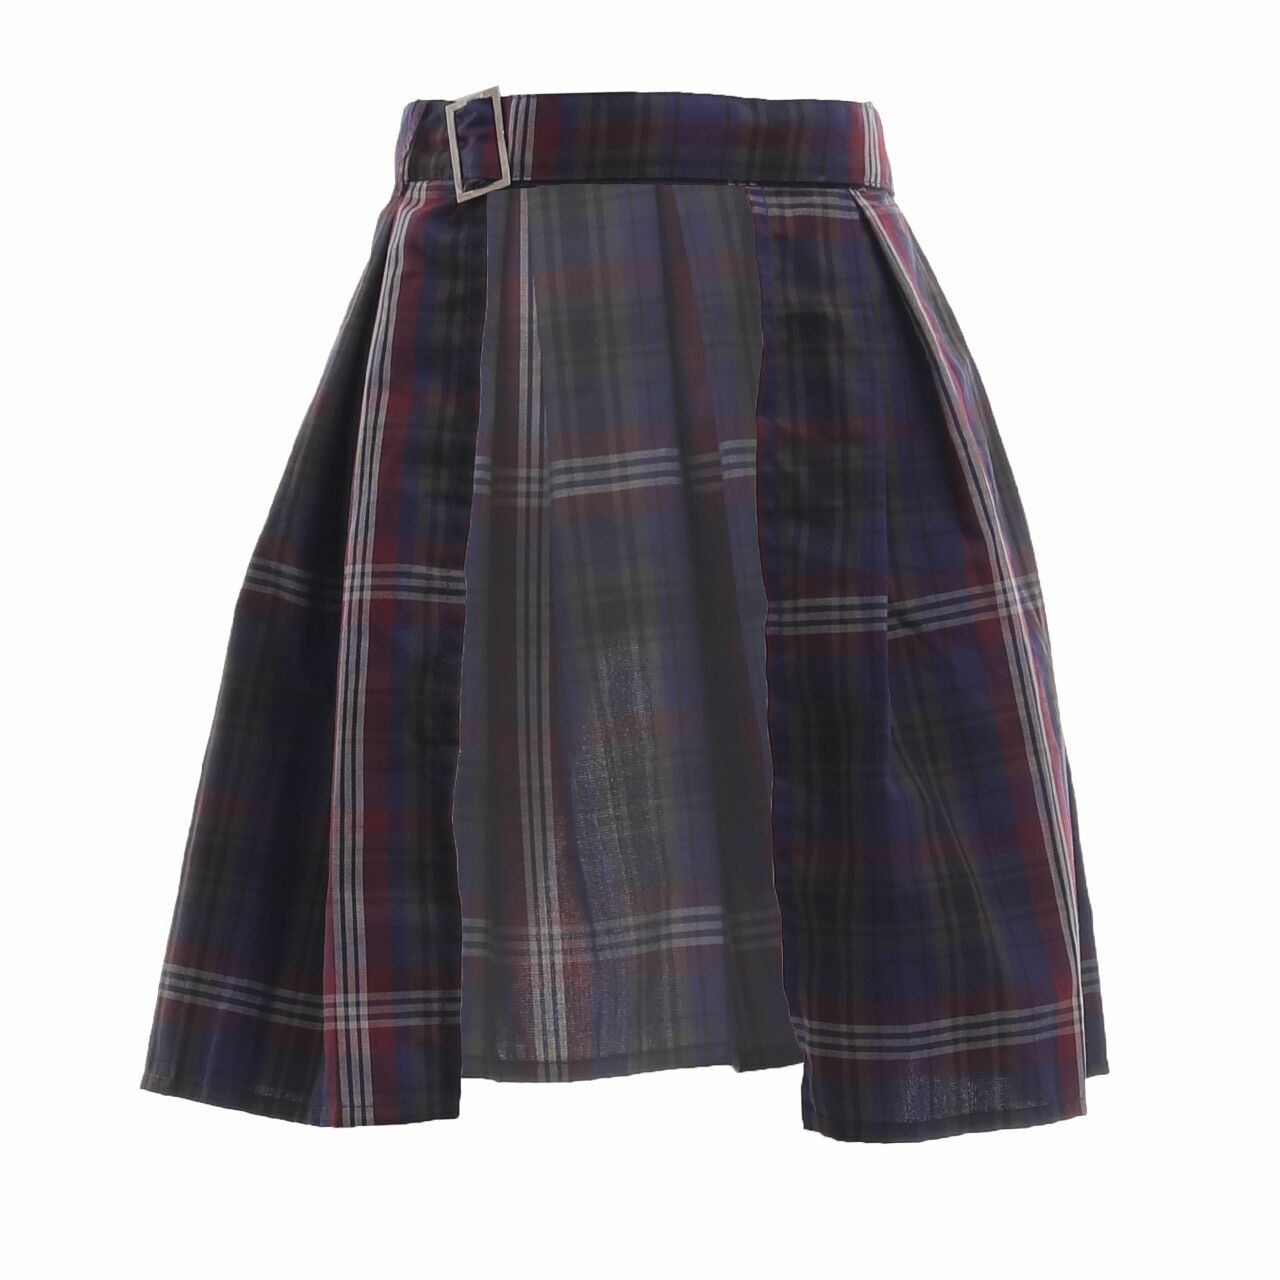 Pluffy's Choice Multicolor Tartan Apron Mini Skirt